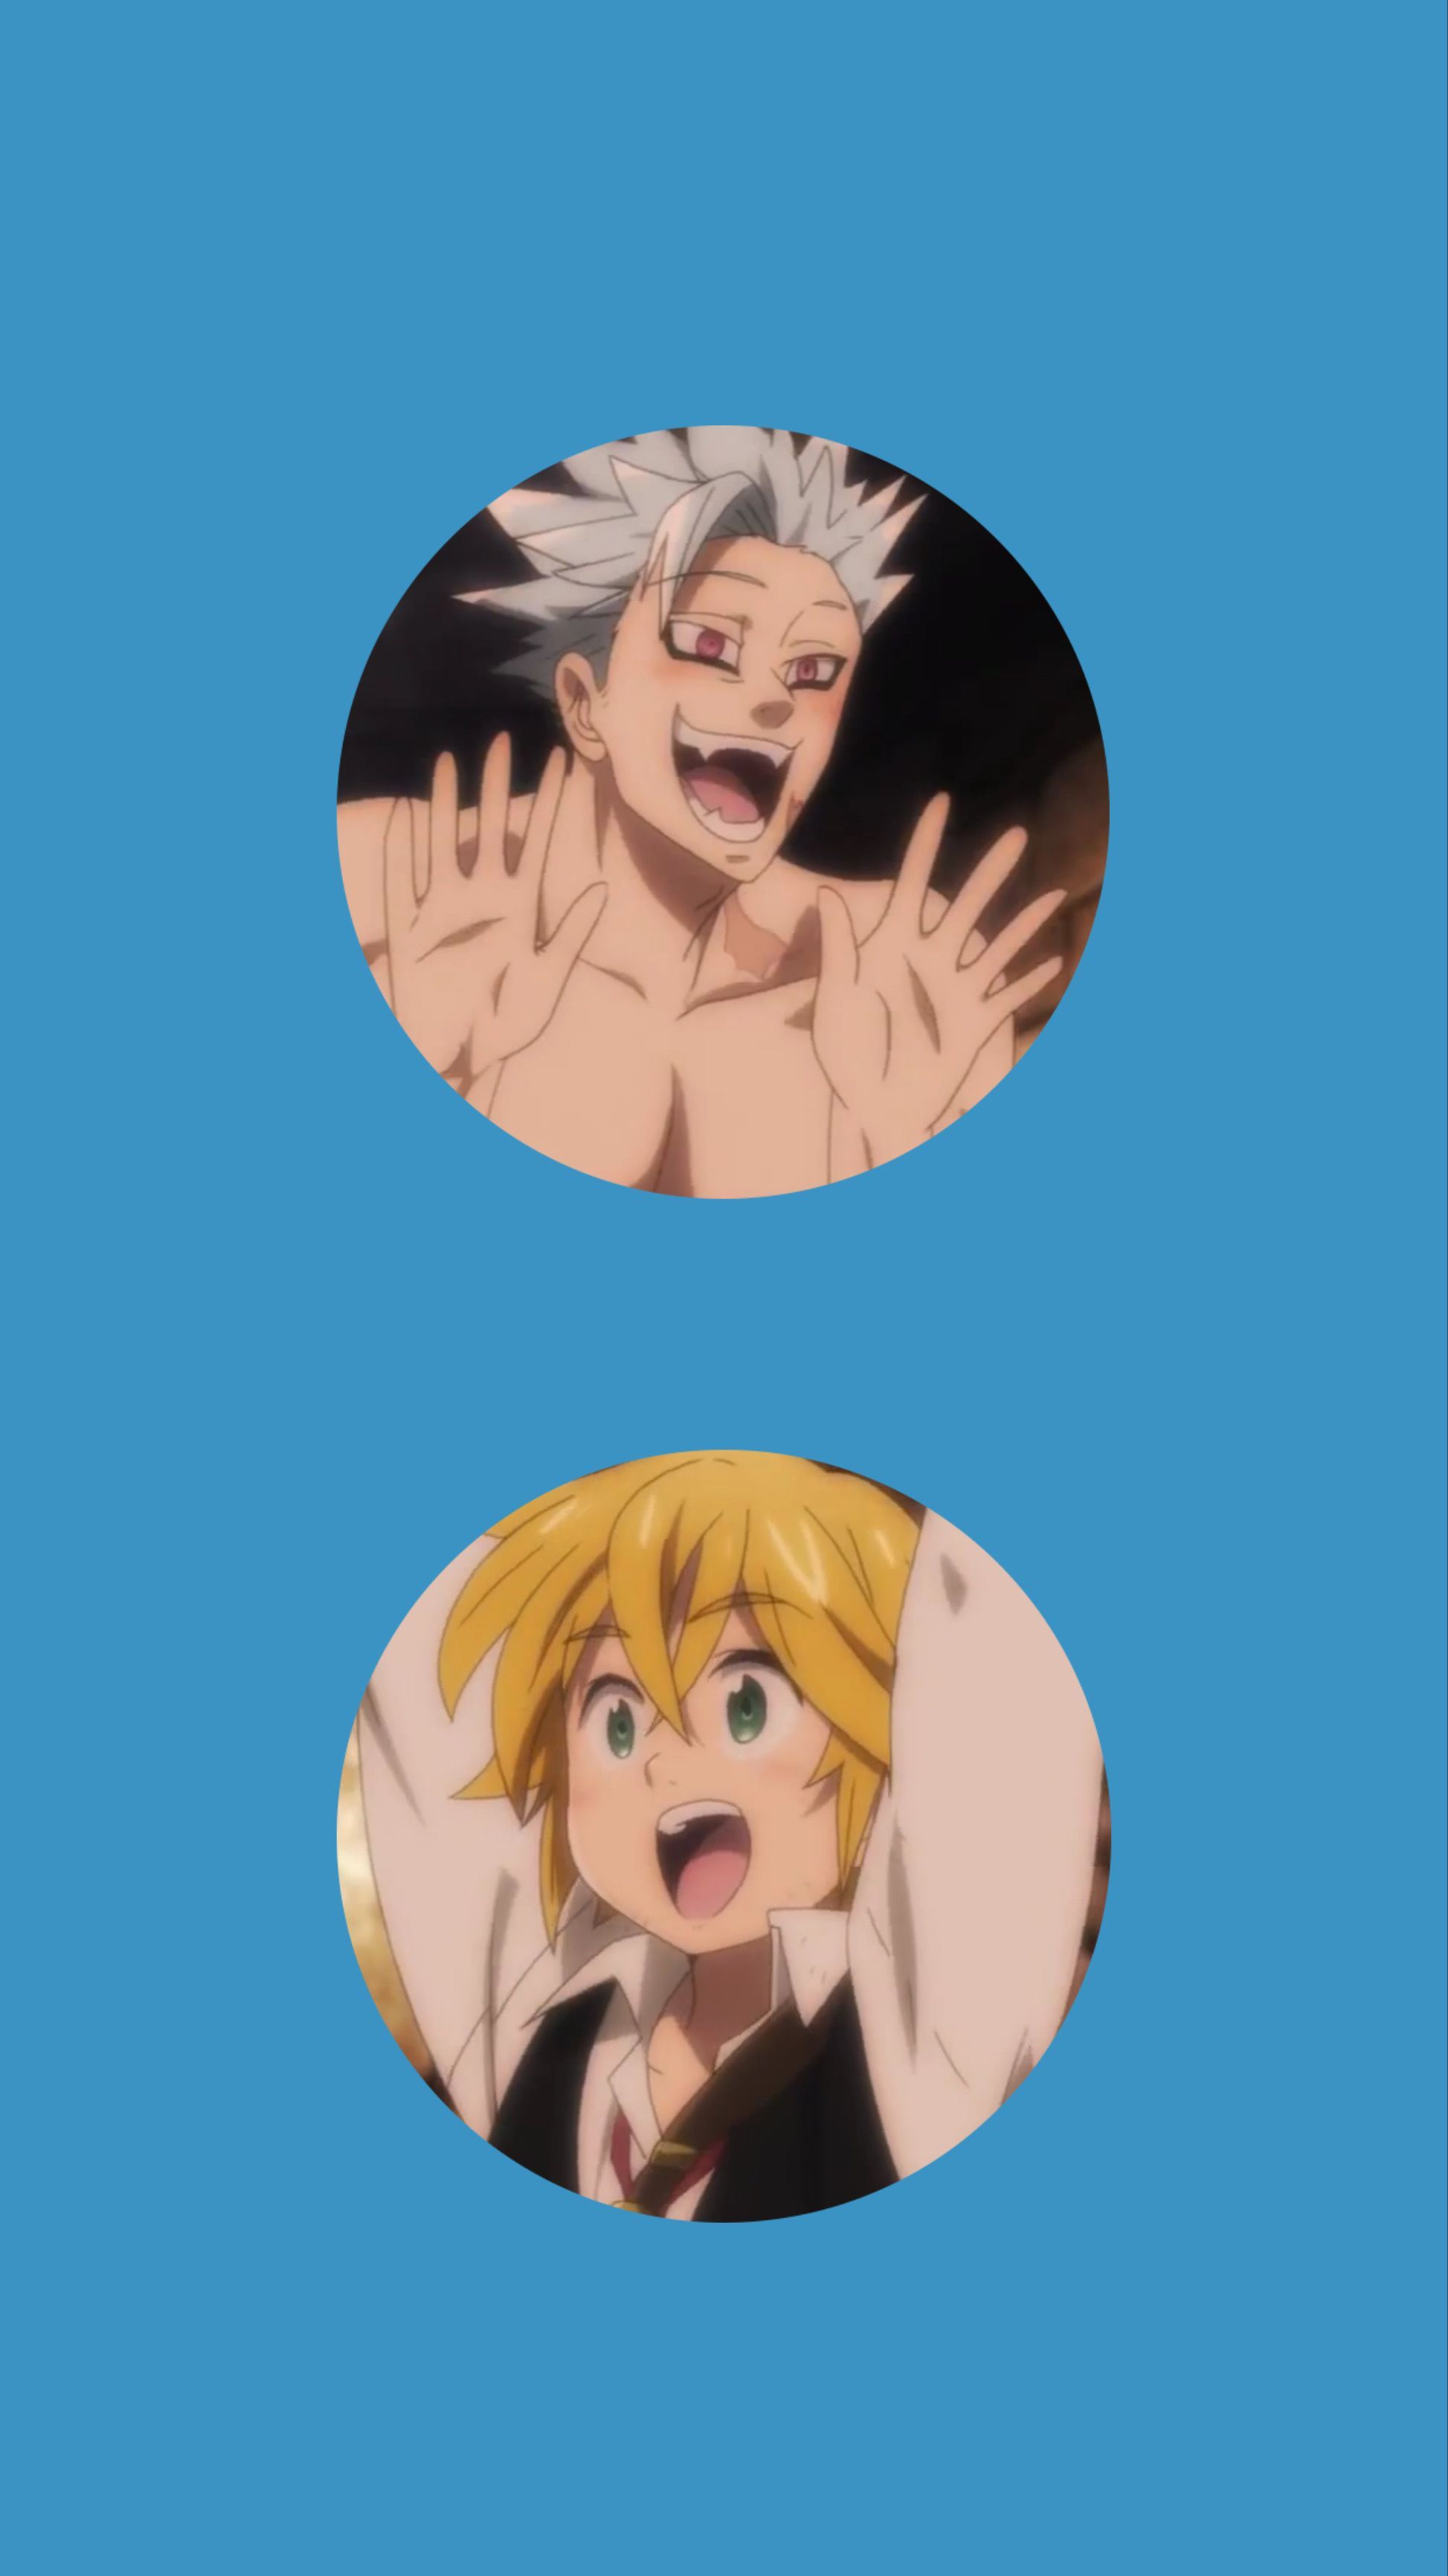 Meliodas and ban duo pfp. Cute anime wallpaper, Anime, Anime lock screen